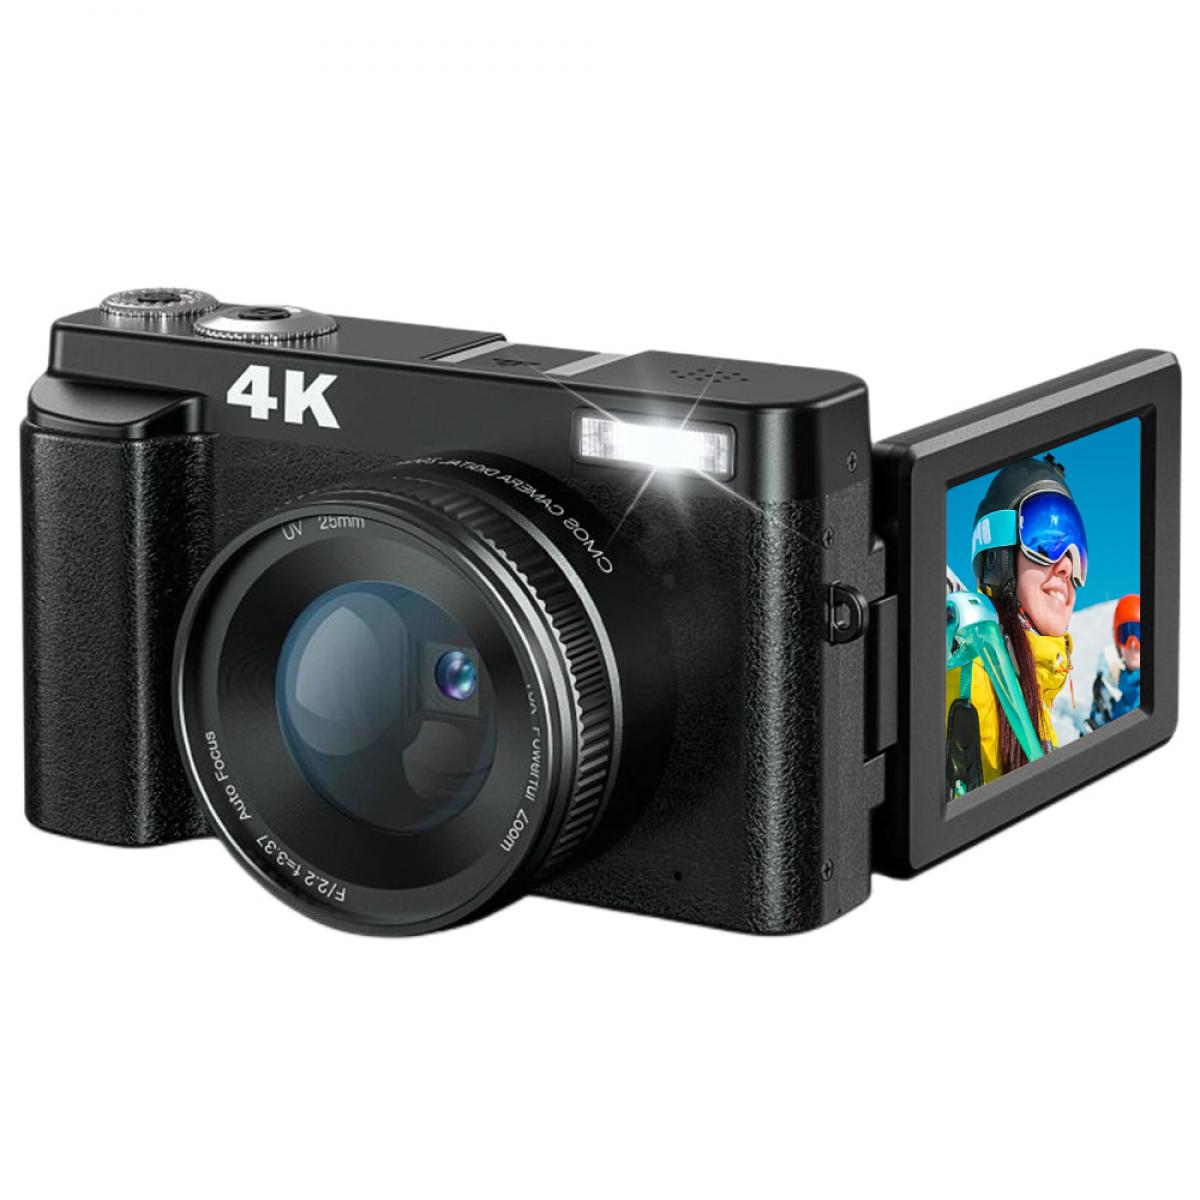 Digital Cameras 4K 64MP 16X Flip Screen Video Camera w/ 2 Batteries For